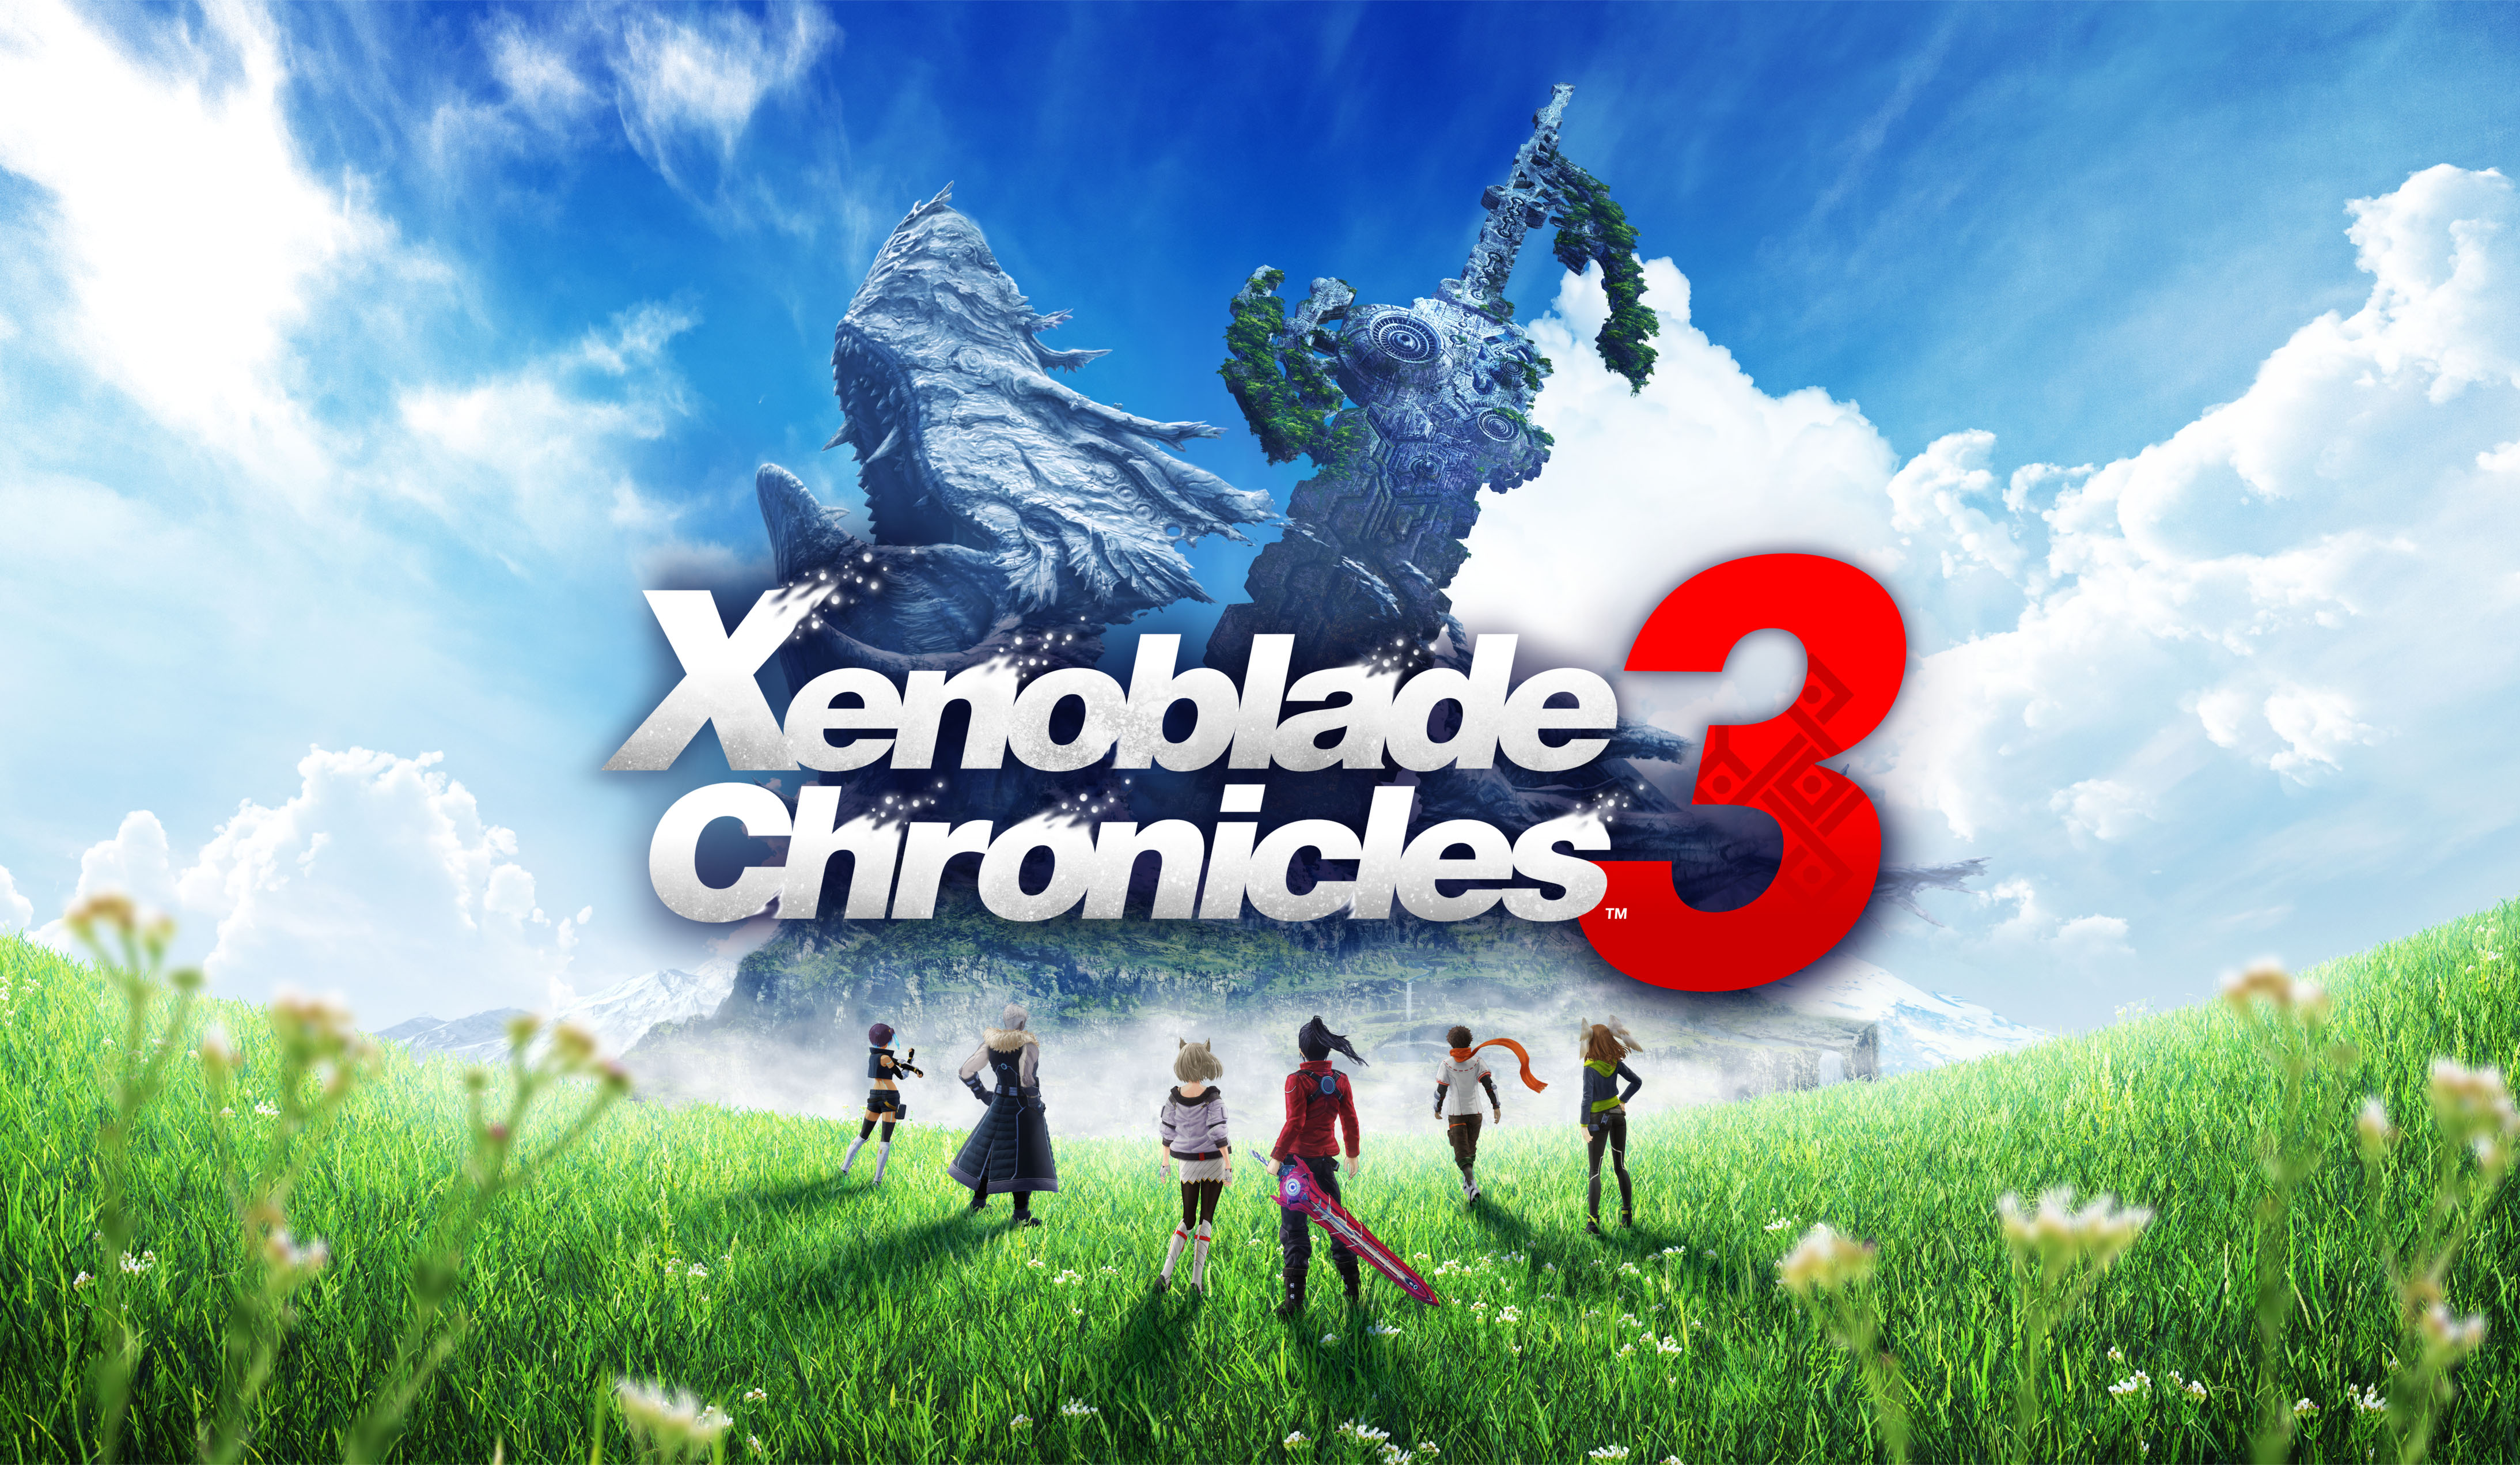 Xenoblade Chronicles 3 ประกาศเลื่อนวางจำหน่ายเร็วขึ้นจากกำหนดเดิมเดือนก.ย. เป็น 29 ก.ค.นี้